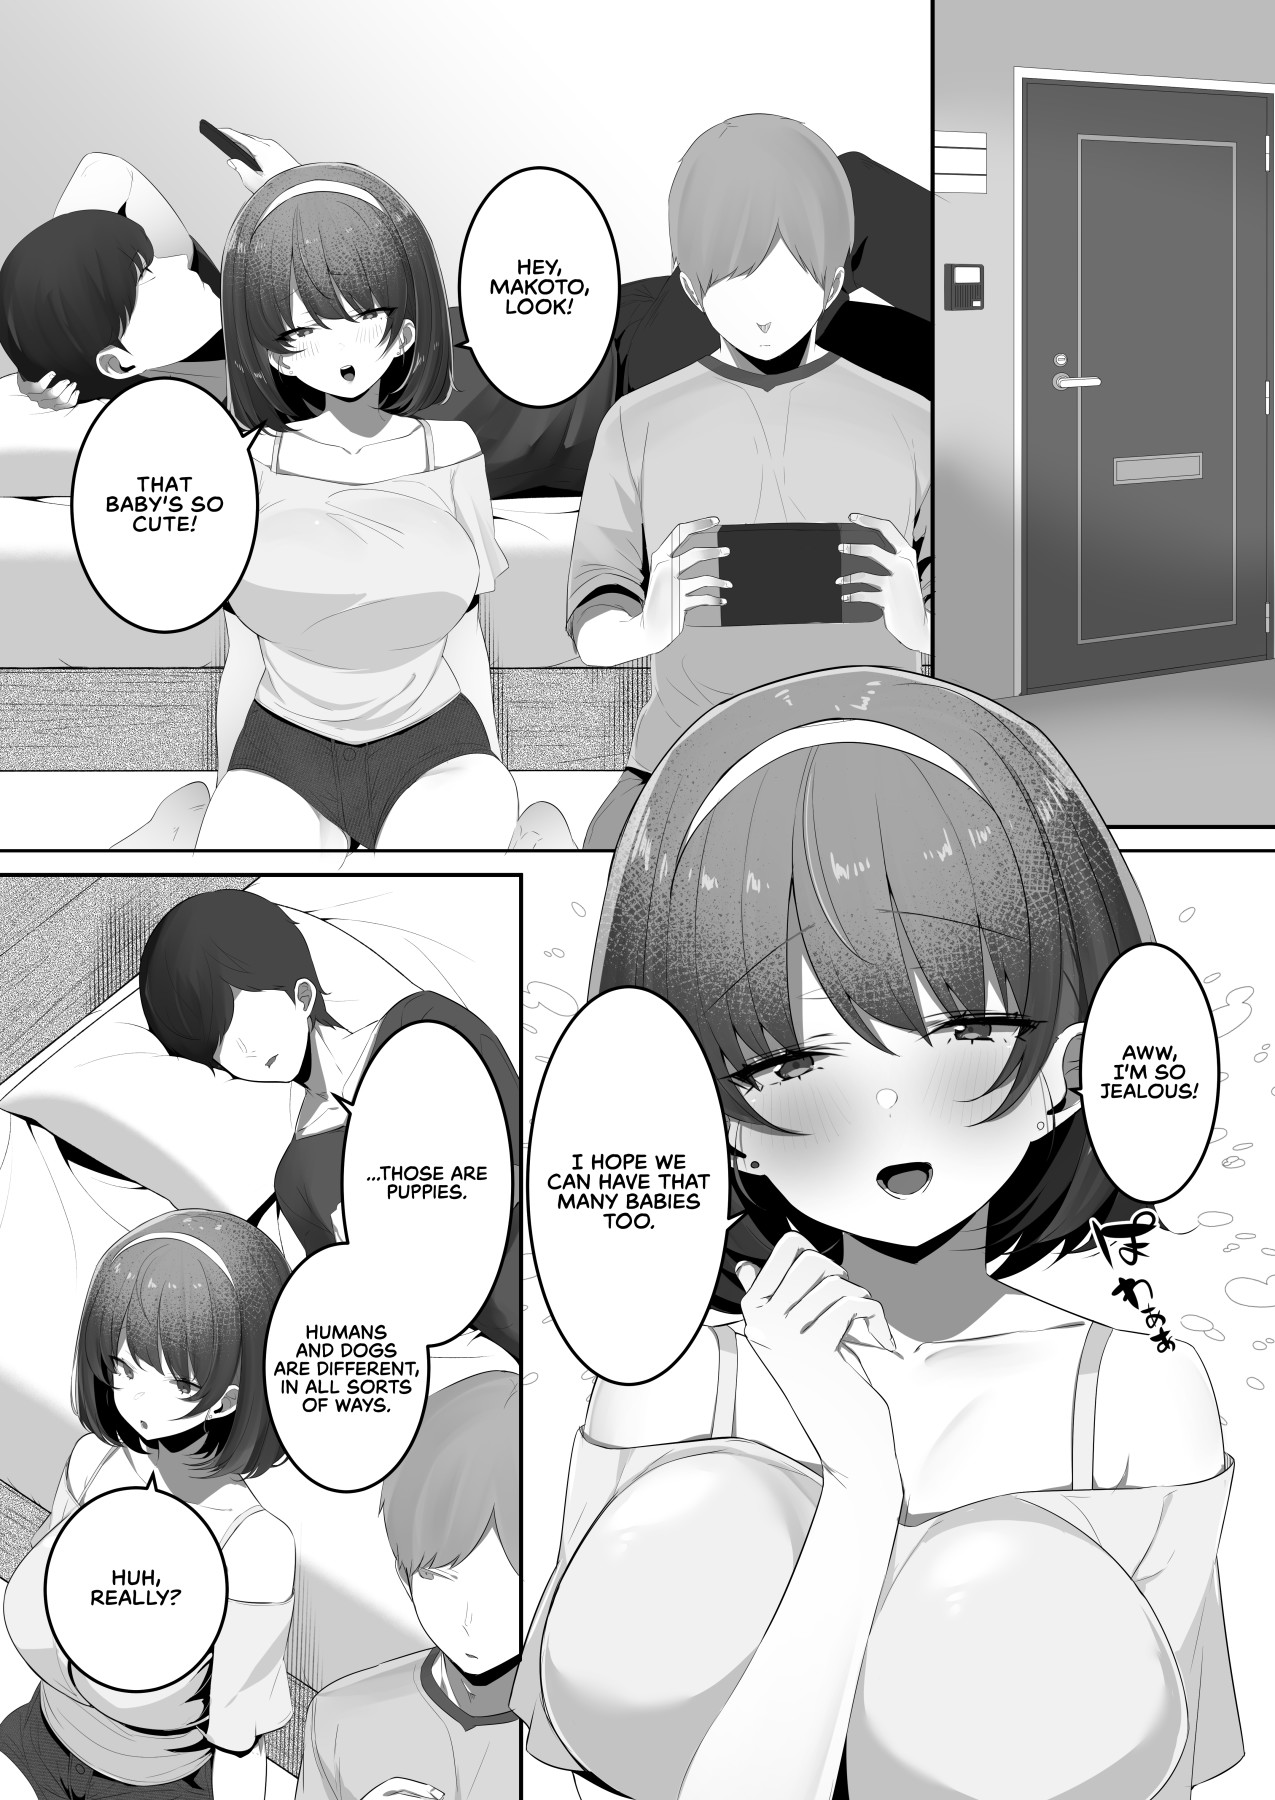 Hentai Manga Comic-A Book About stealing My Busty Childhood Friend Away From Her Boyfriend & Cumming Inside Her-Read-2